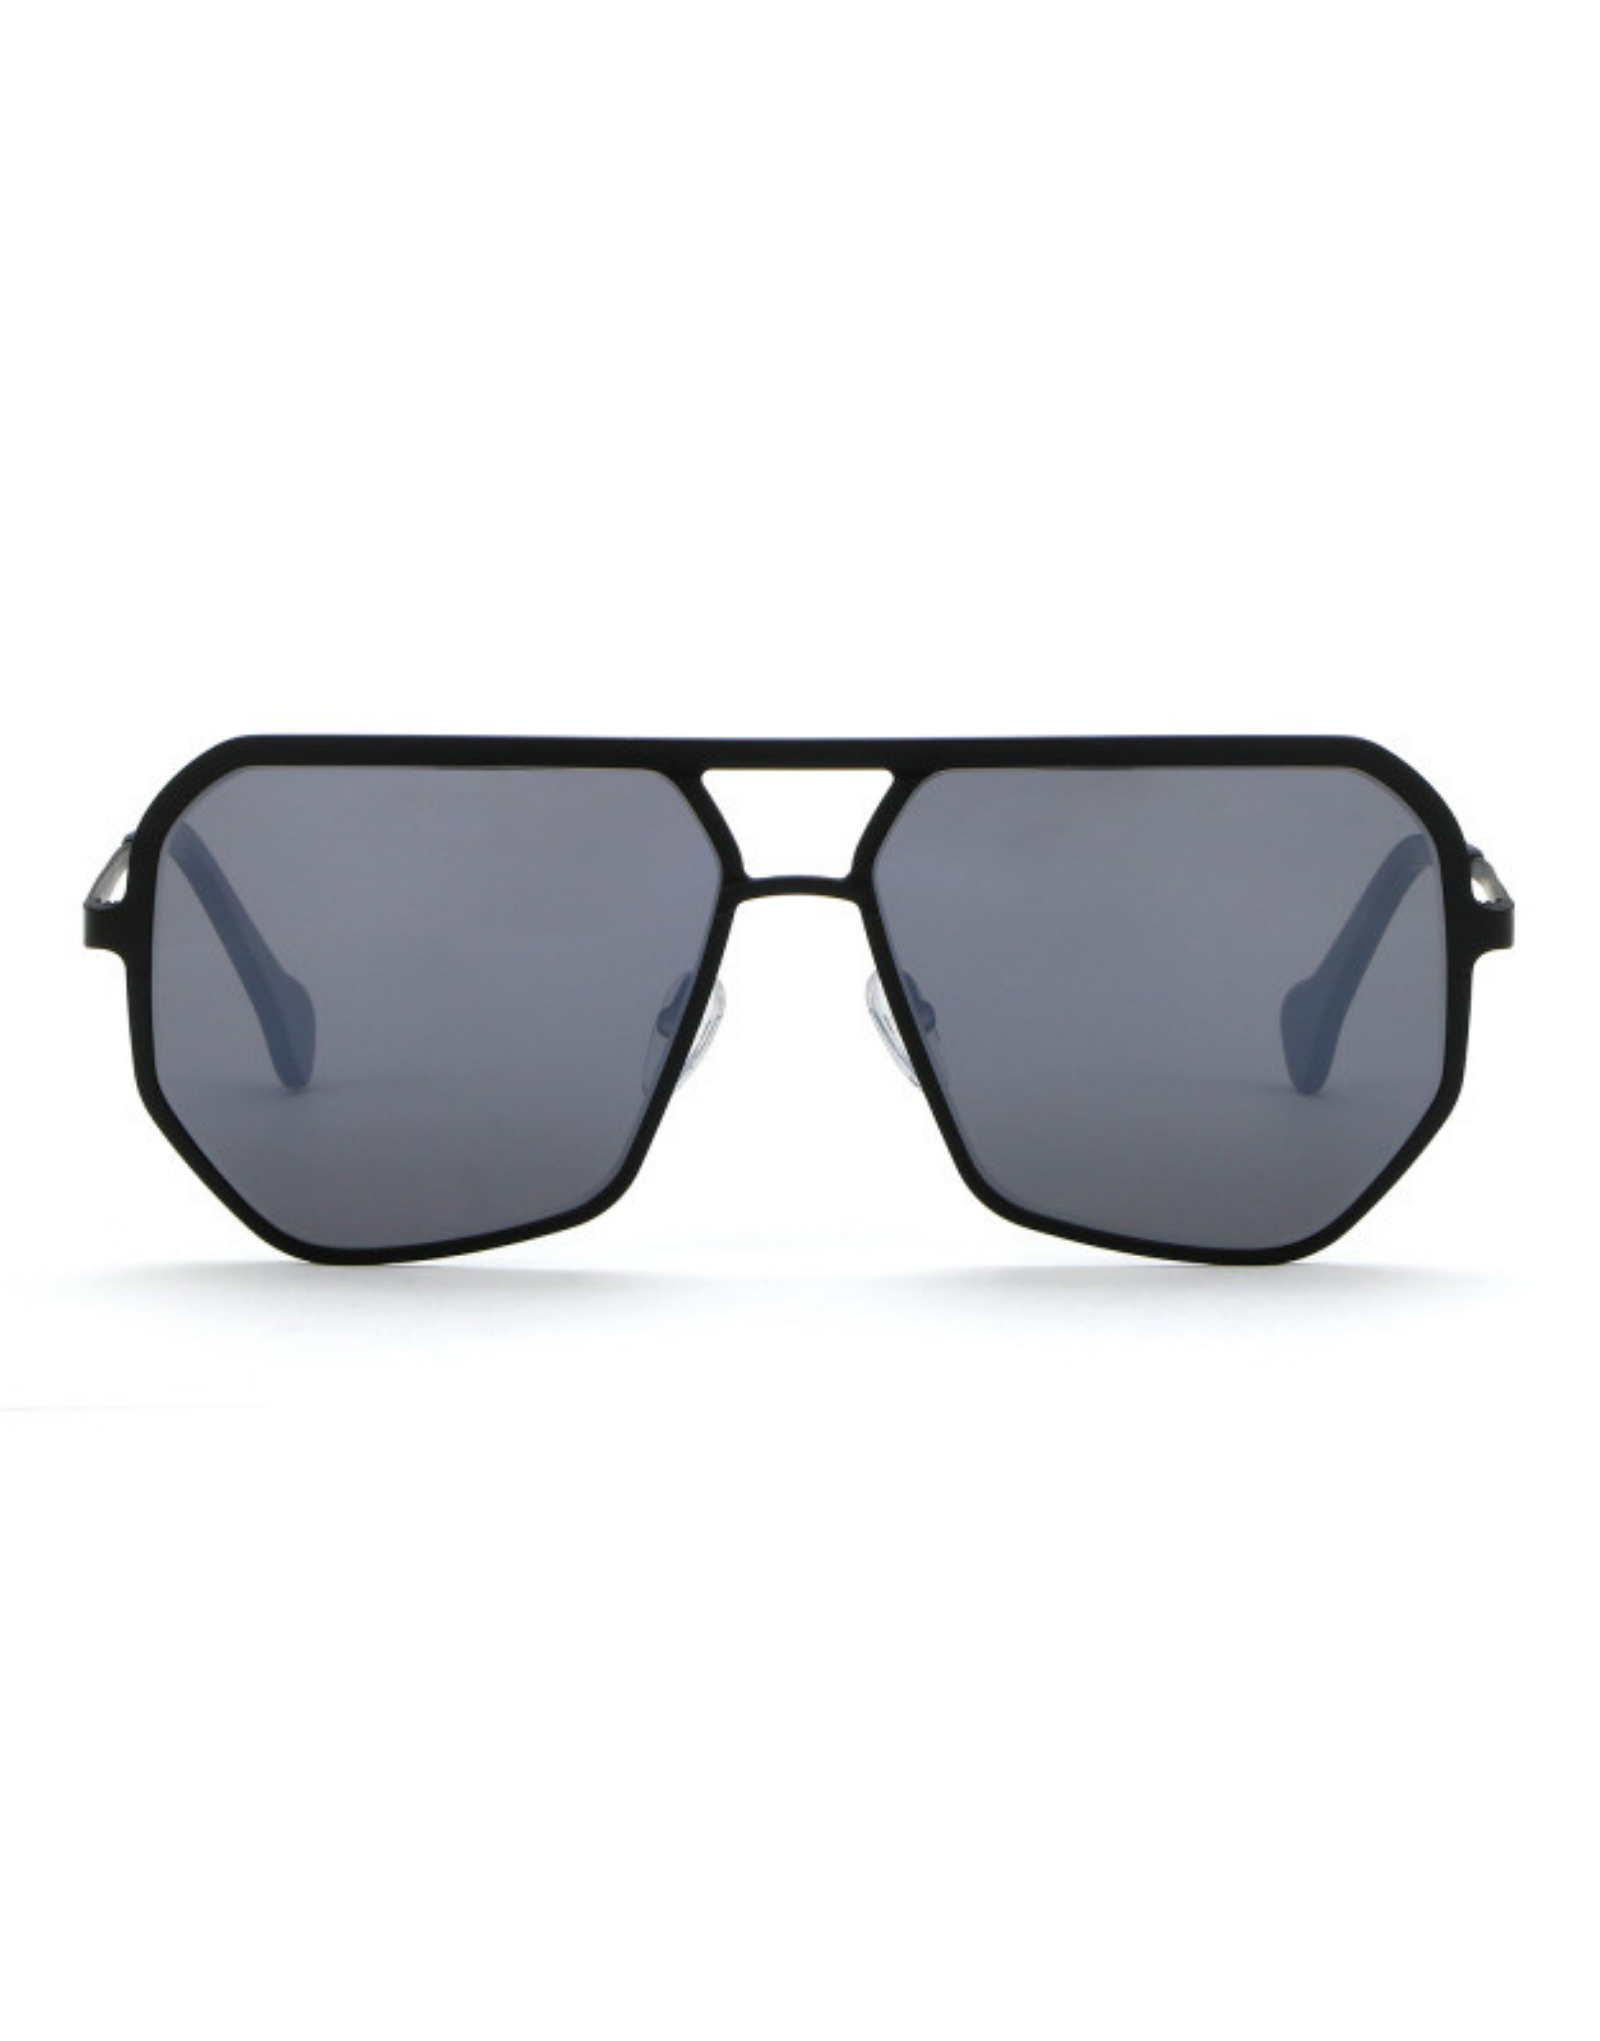 Mens Eyewear & Frames | Saturnino Sunglasses Italy | ROBINSON MAN Melbourne